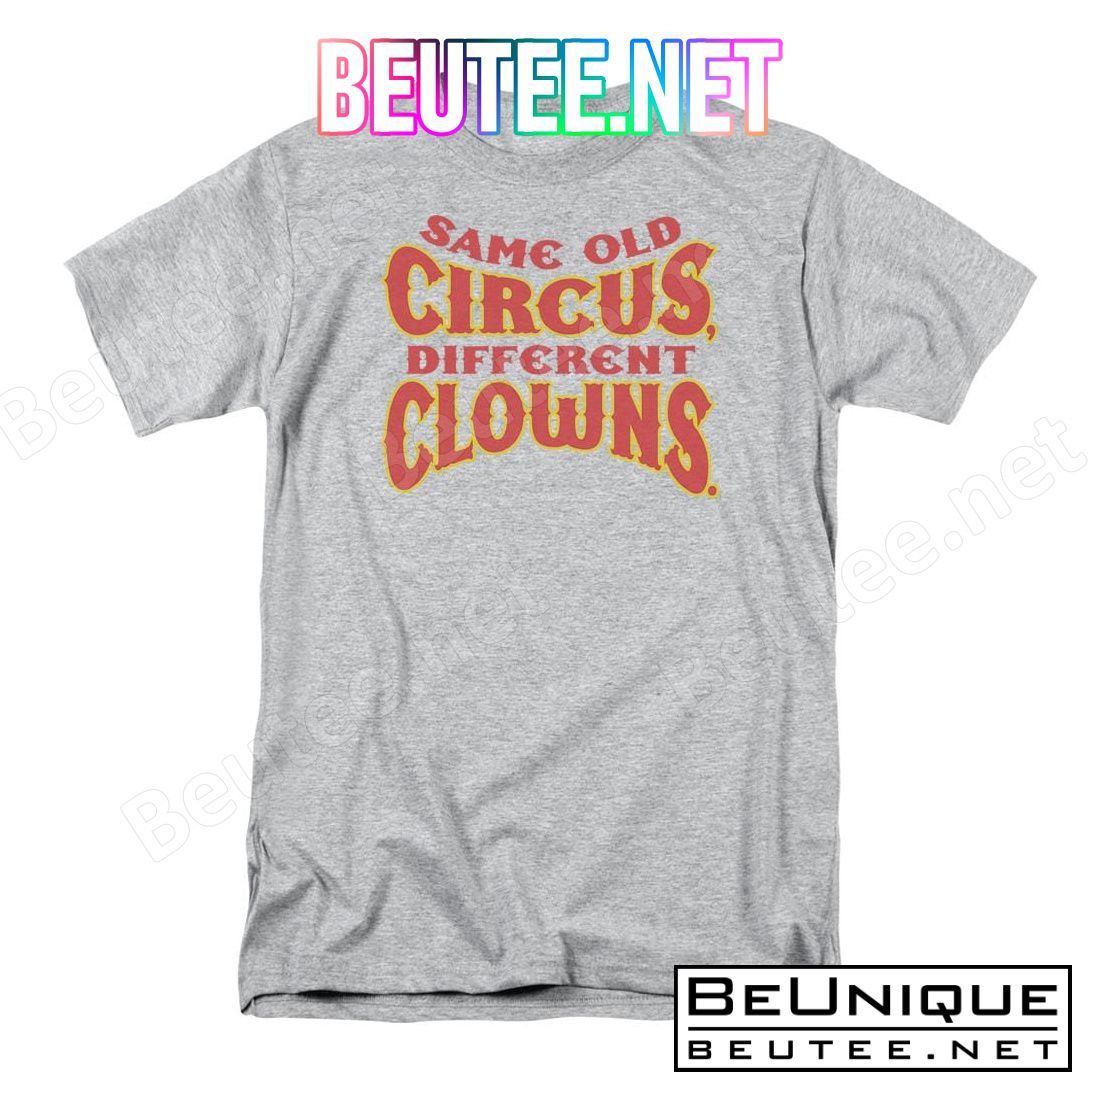 Same Old Circus T-shirt